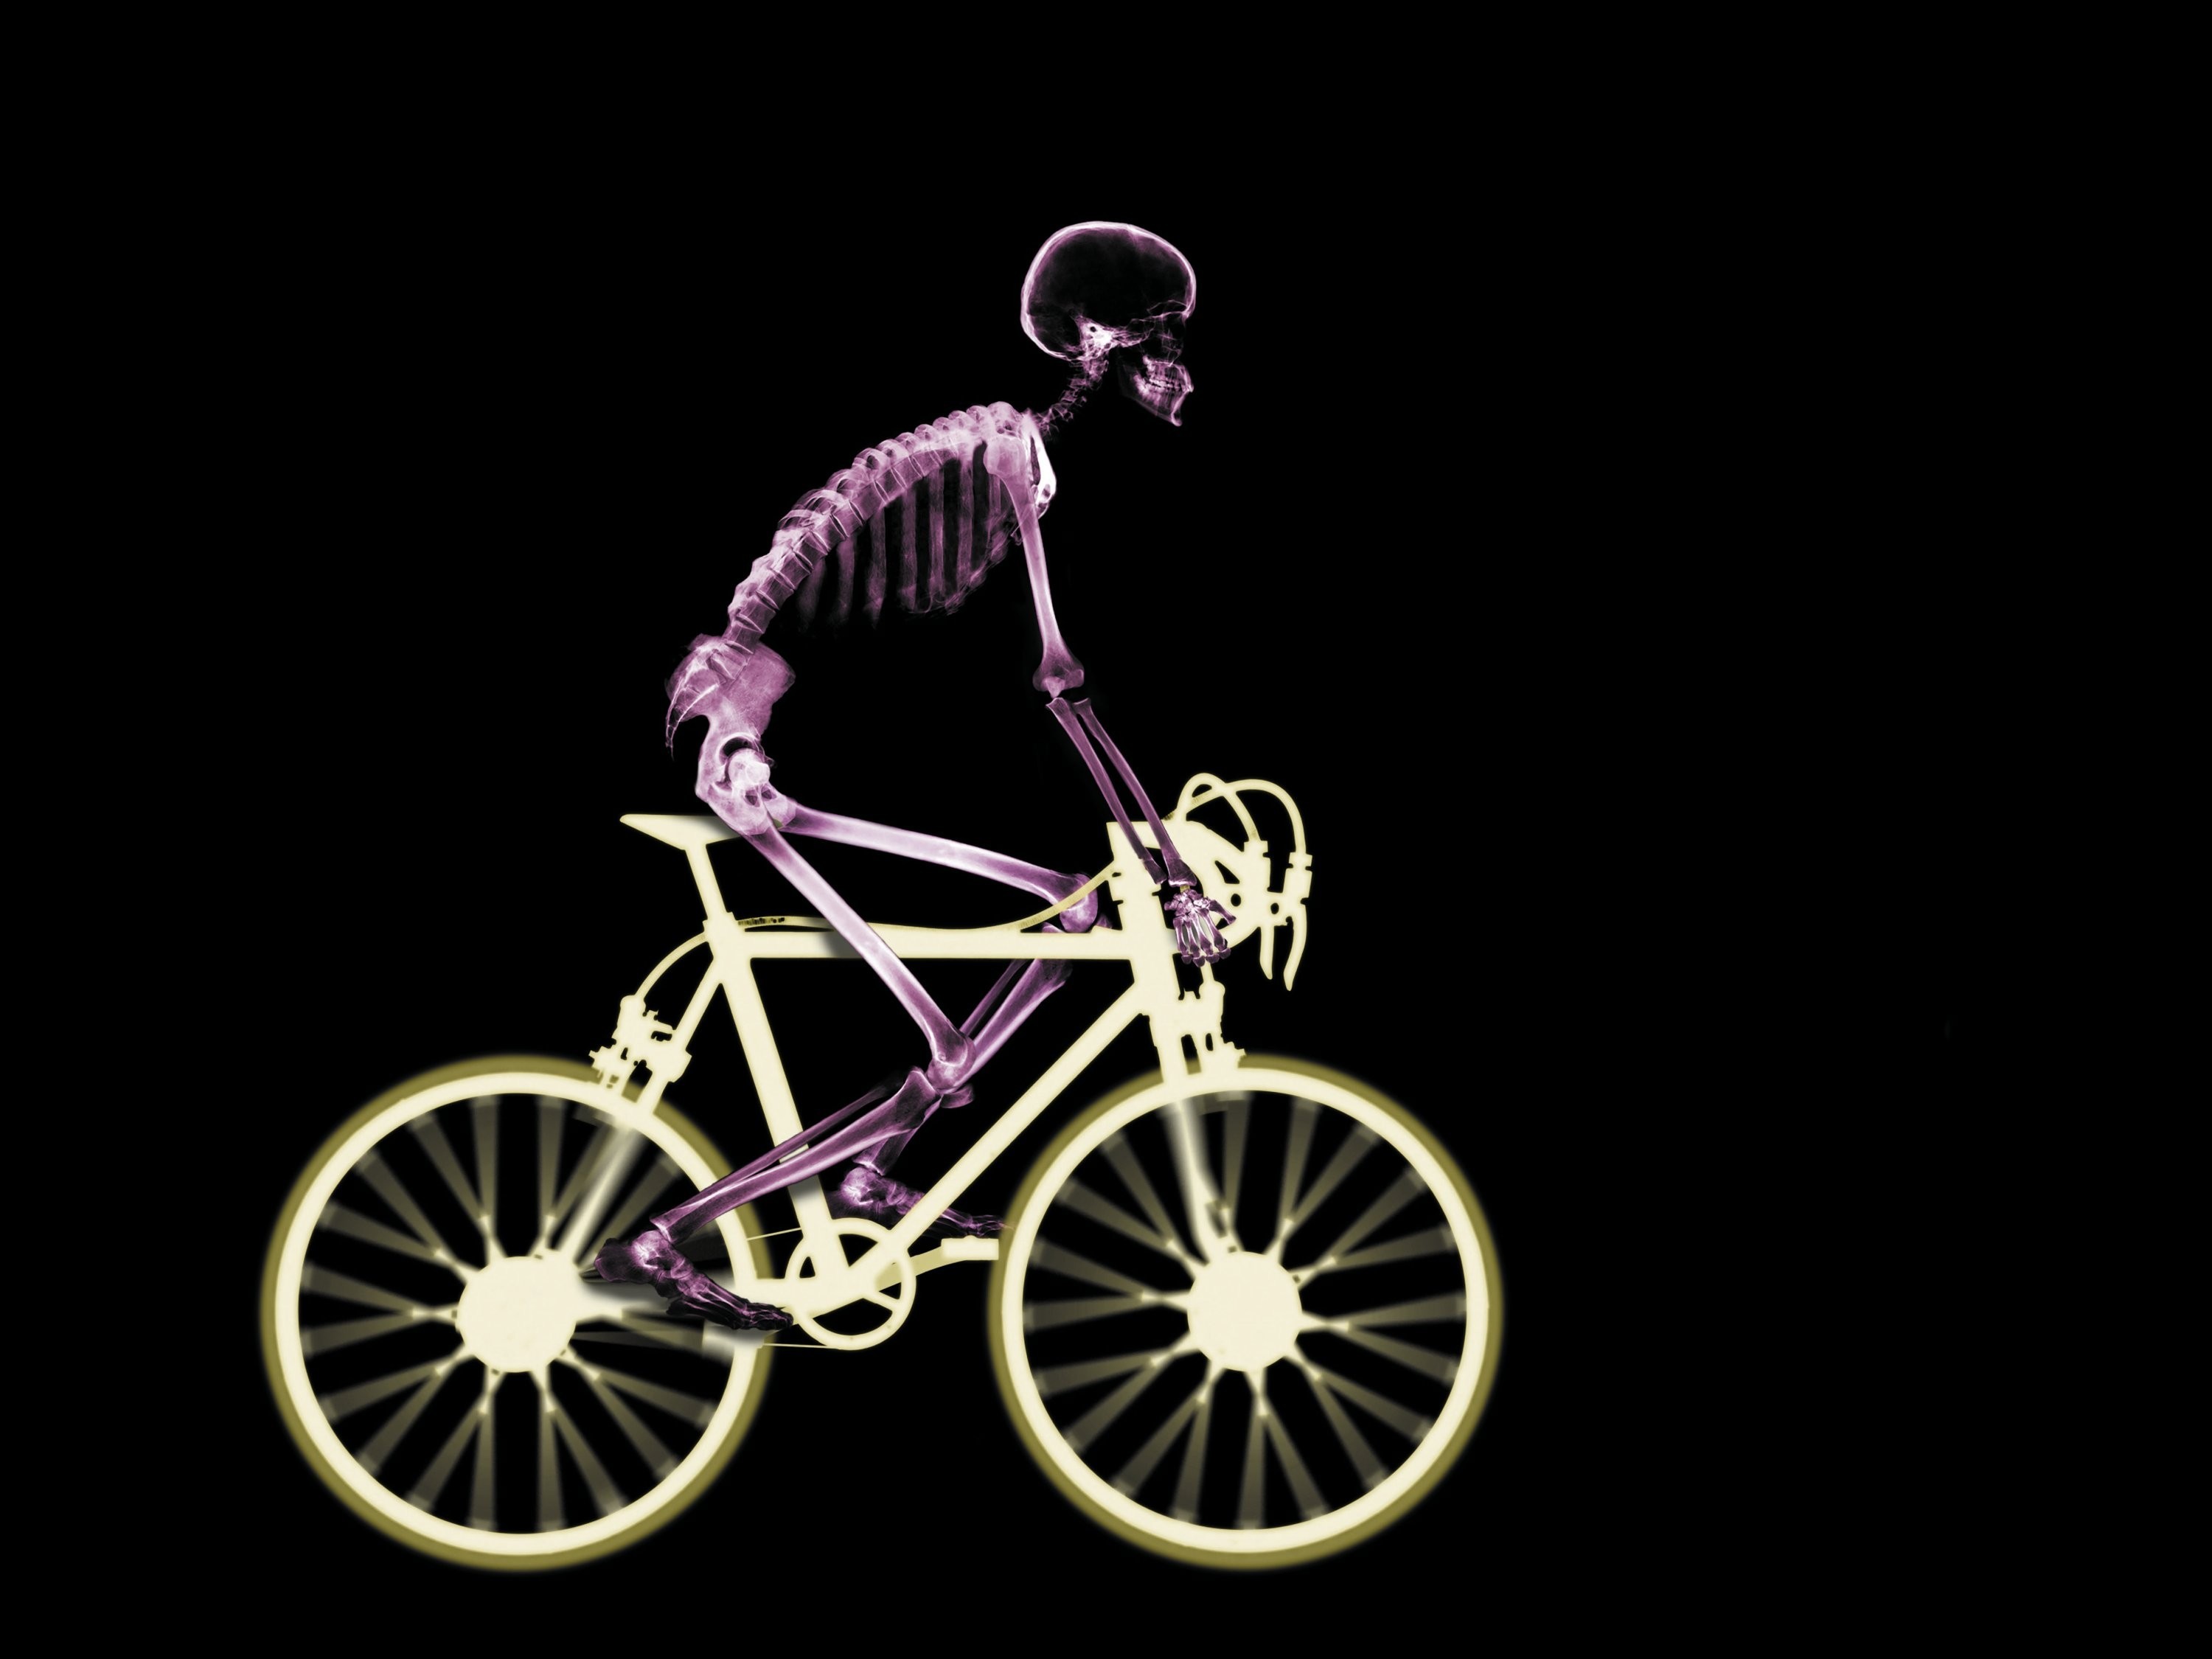 велосипедист рентген, текстура, фон, скачать фото, bike x-ray texture background